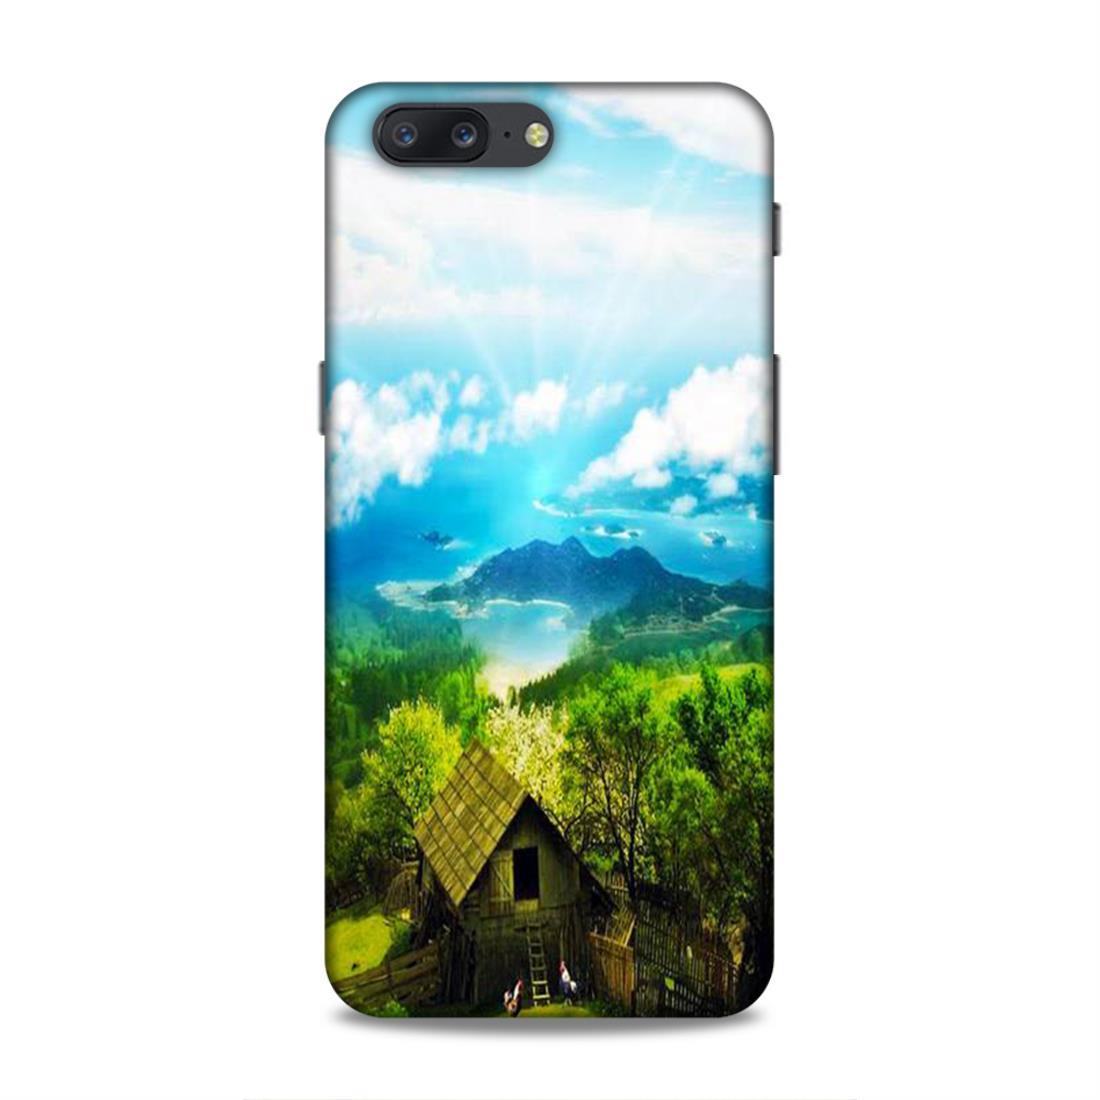 Peacefull Natur OnePlus 5 Mobile Cover